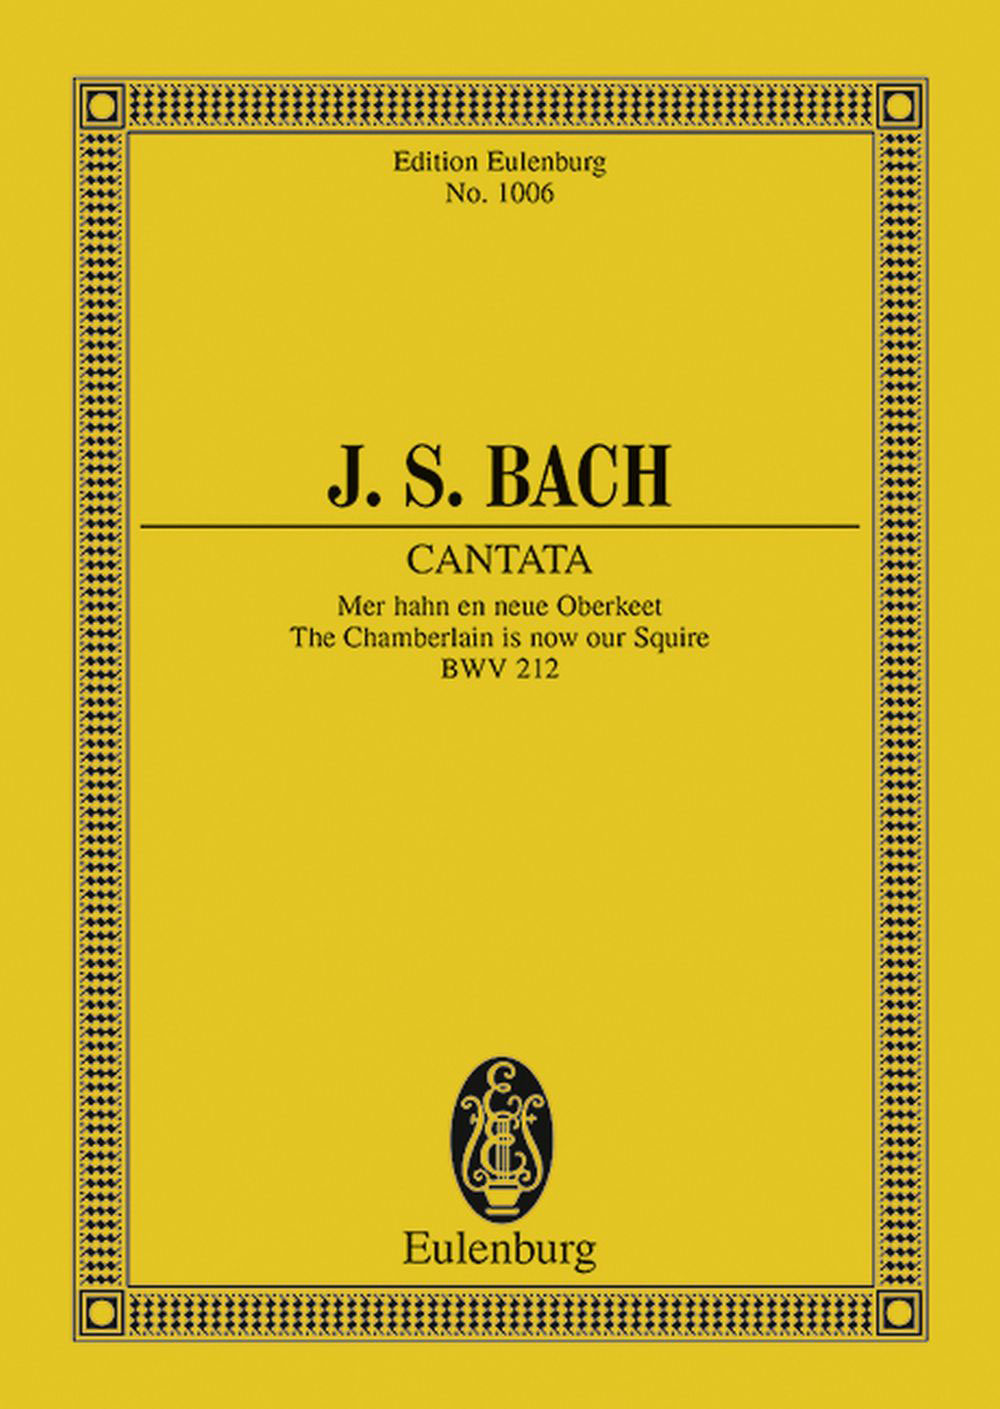 EULENBURG BACH J.S. - CANTATA NO.212 BWV 212 - 2 SOLO PARTS, CHOIR AND CHAMBER ORCHESTRA